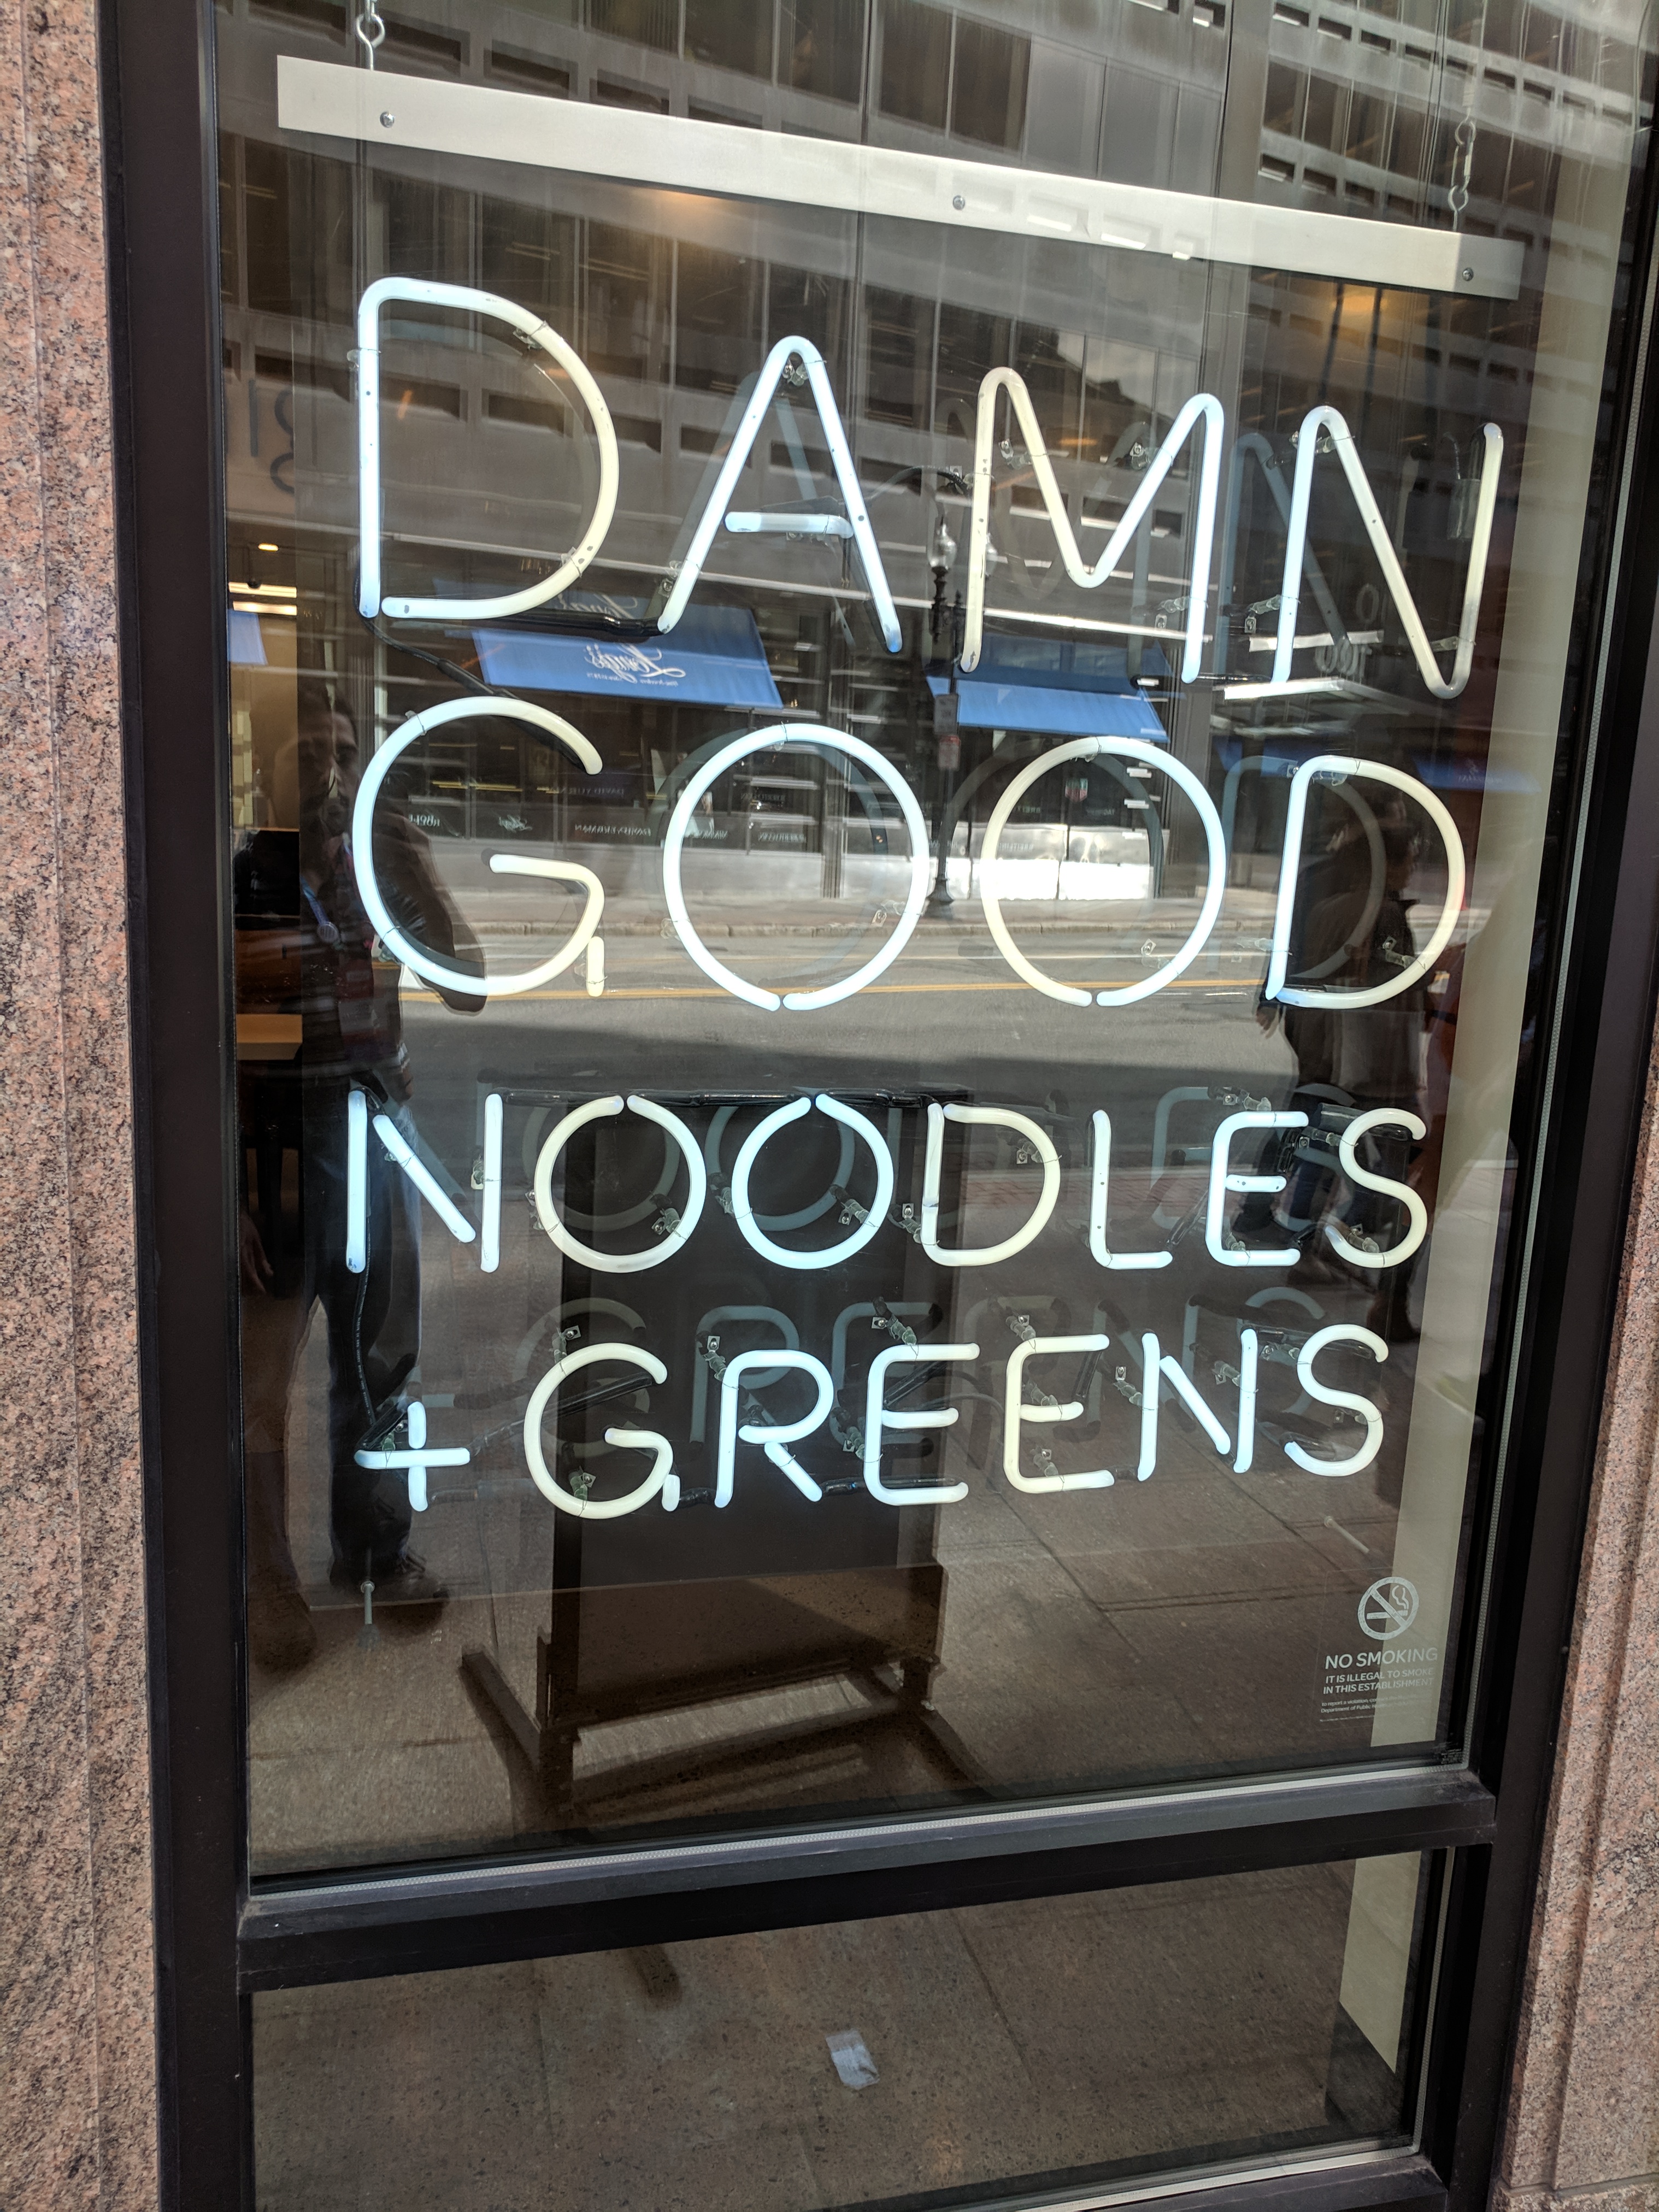 a sign that reads "Damn good noodles"